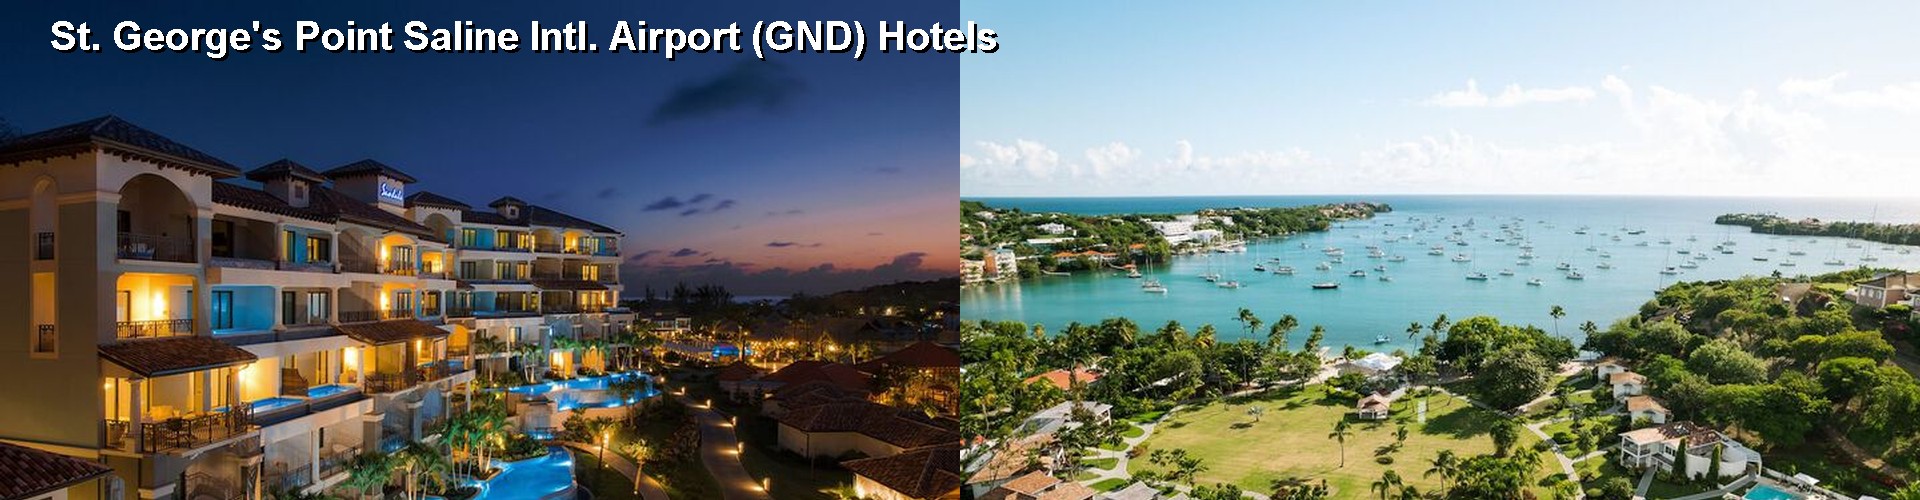 5 Best Hotels near St. George's Point Saline Intl. Airport (GND)